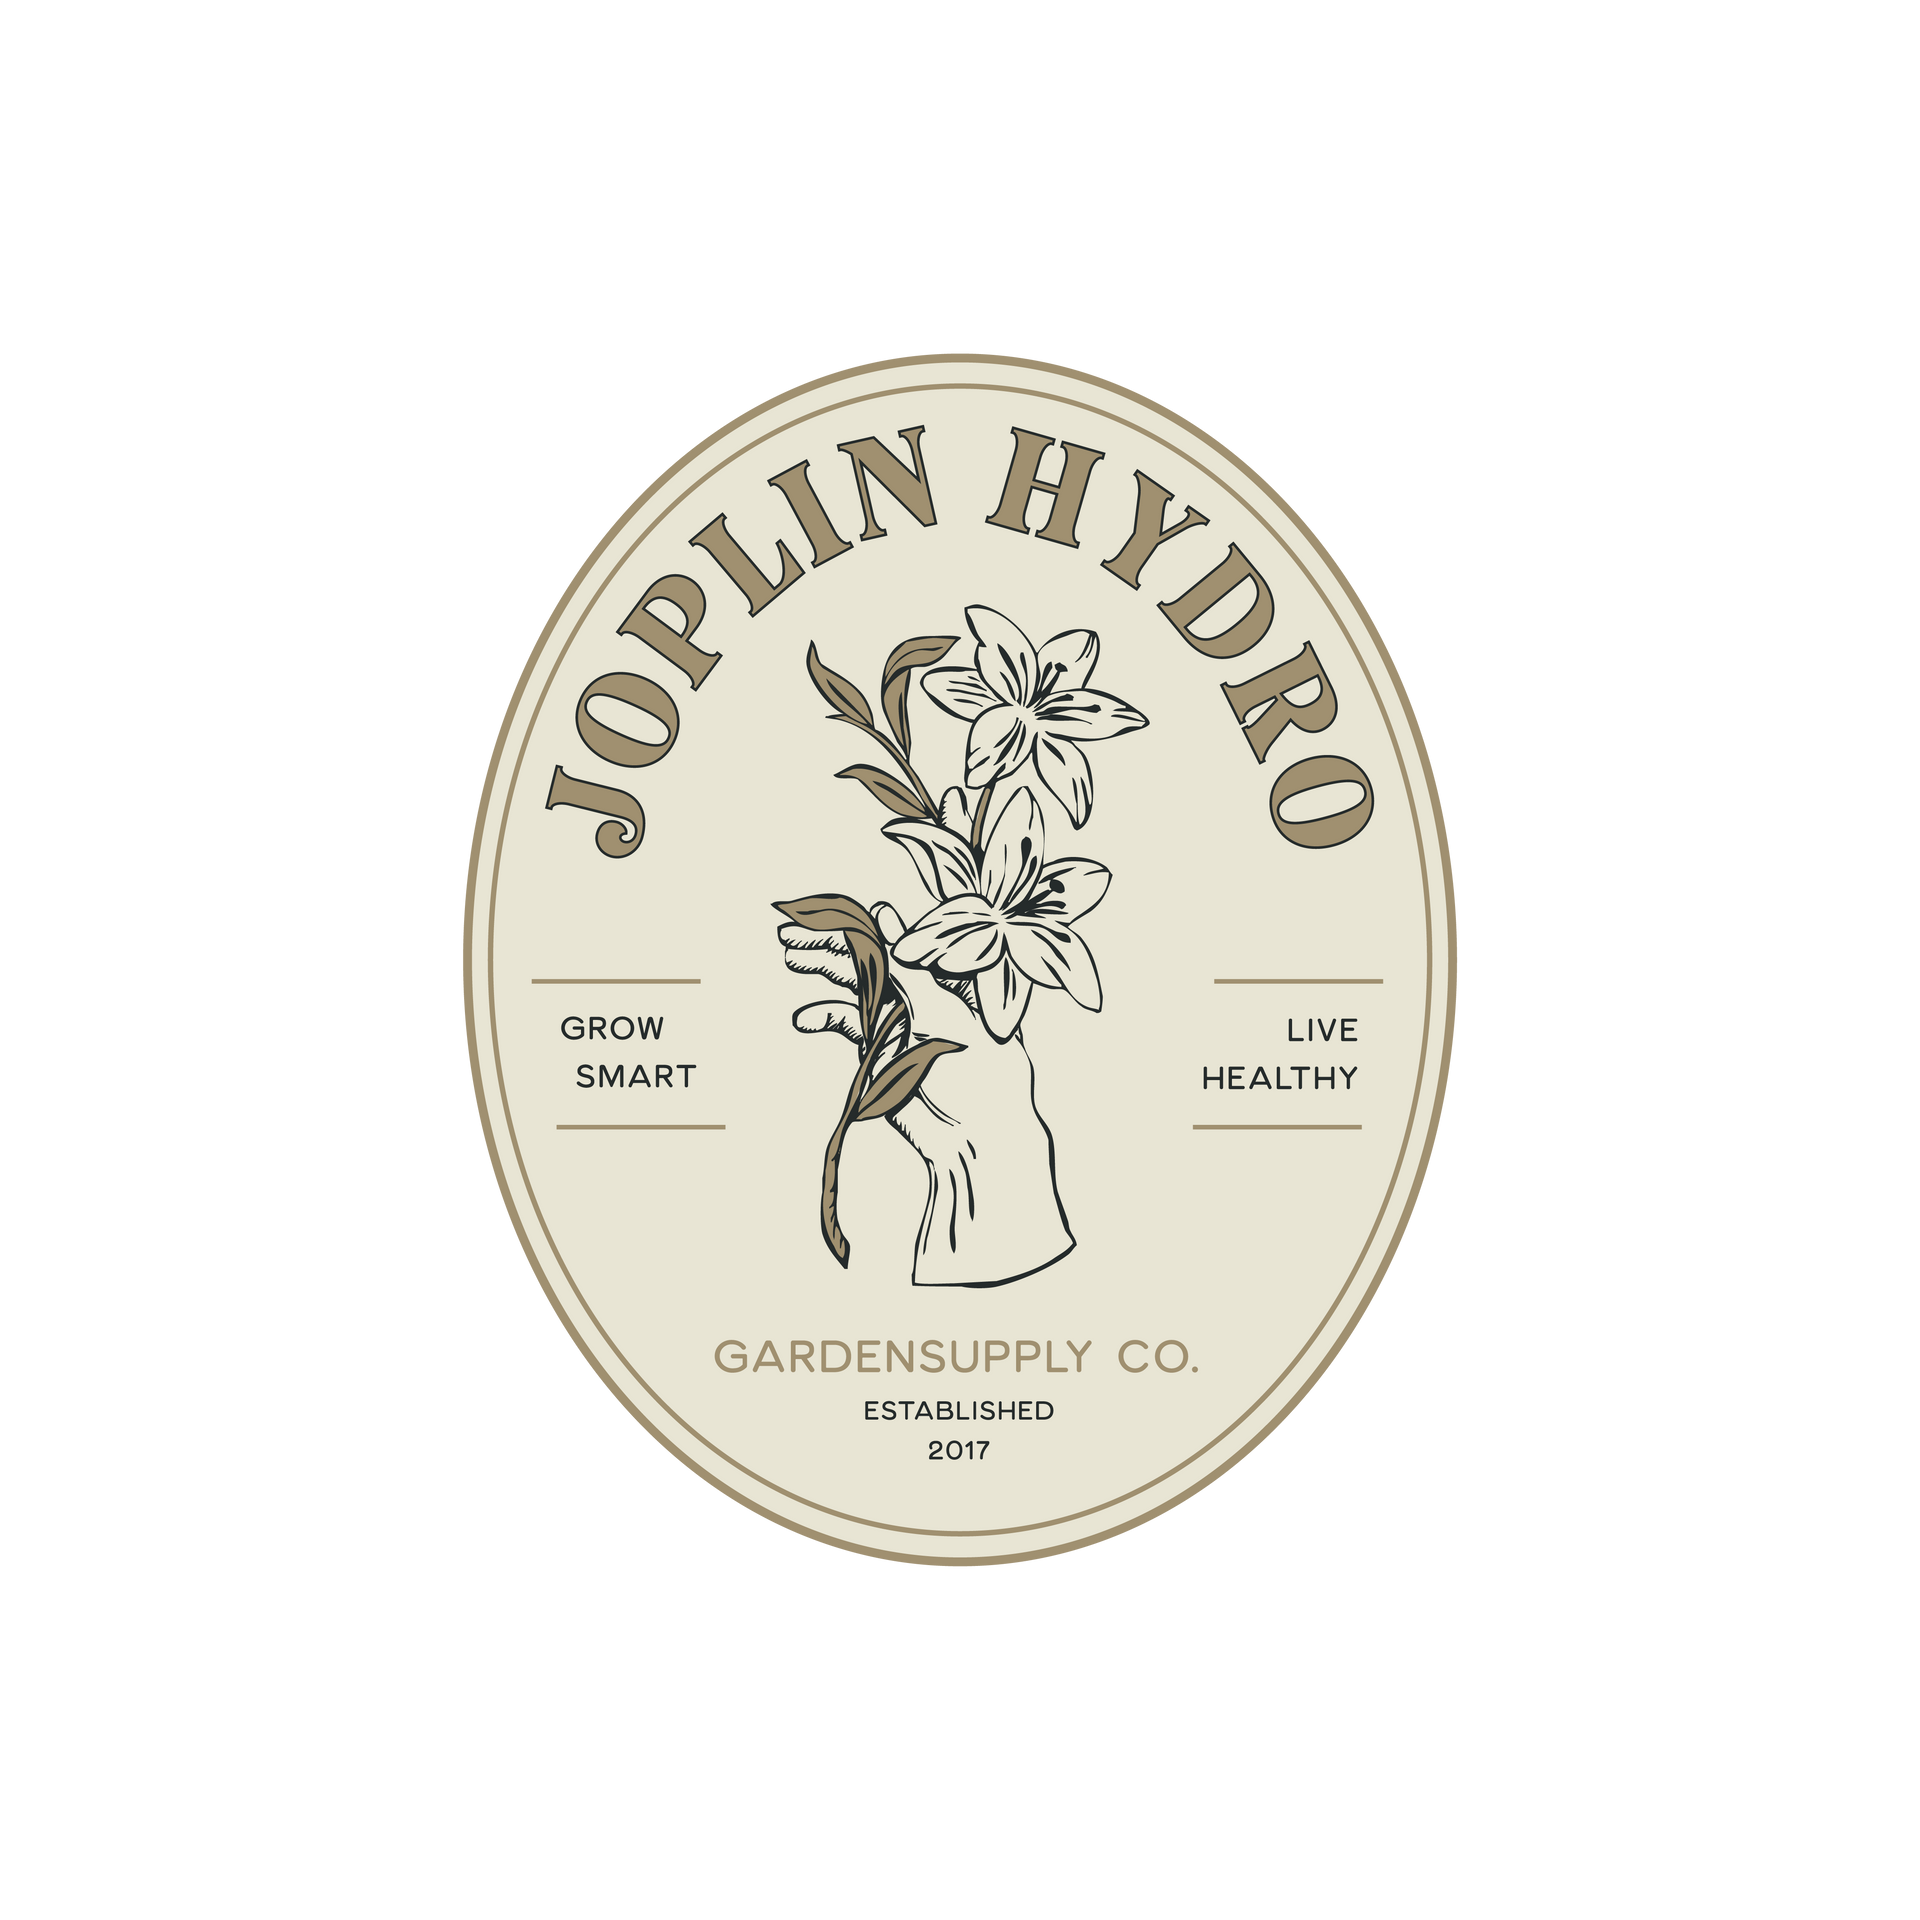 Joplin Hydro and Garden Supply Co. Logo